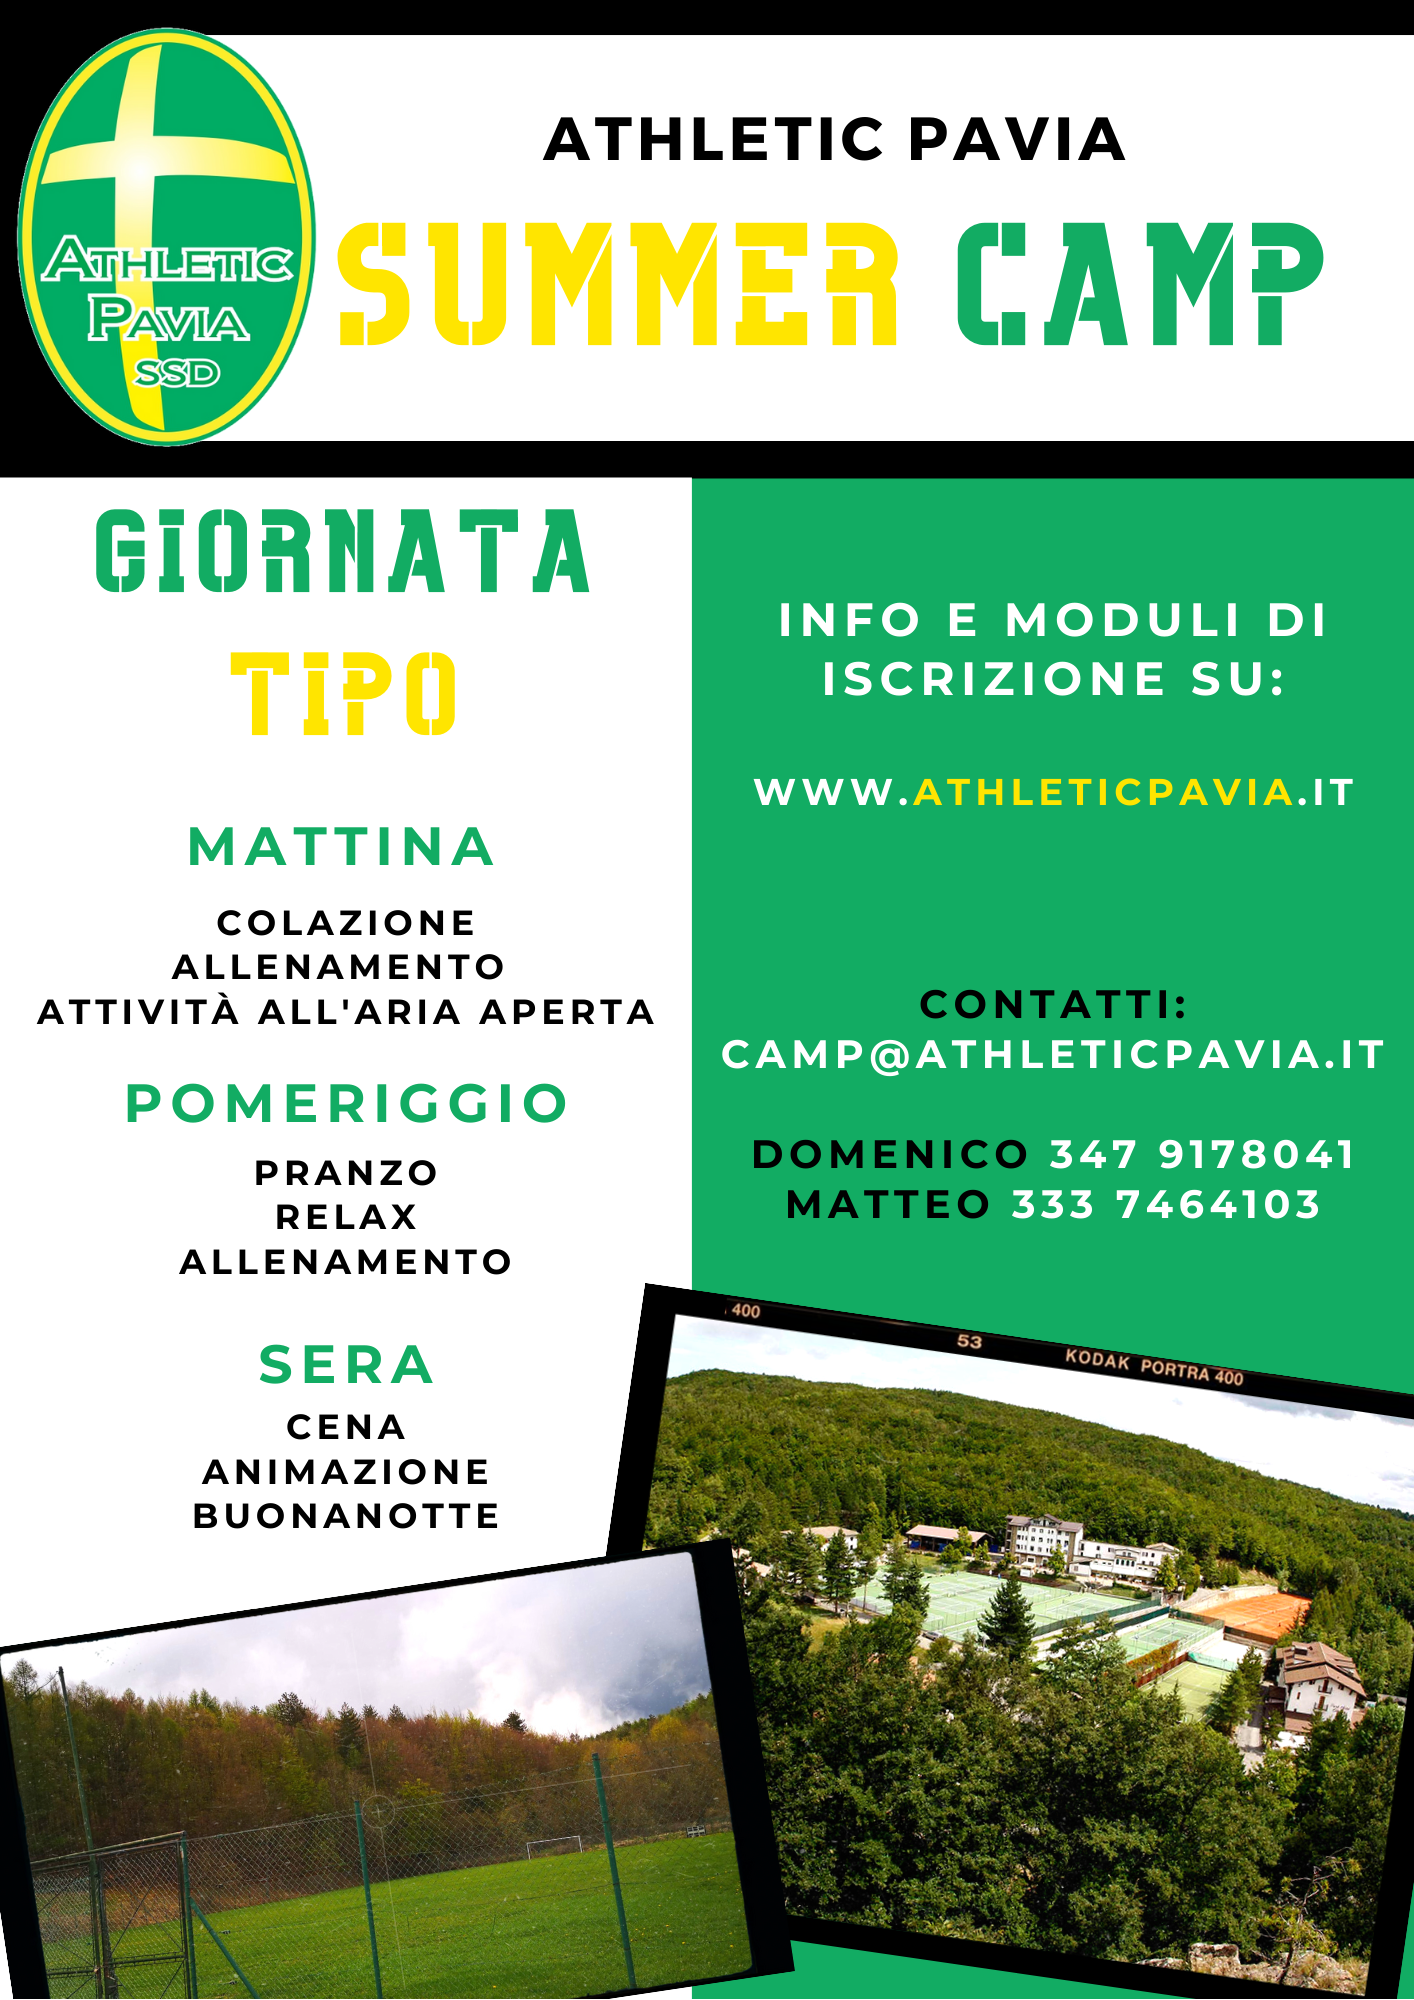 Athletic Pavia Summer Camp